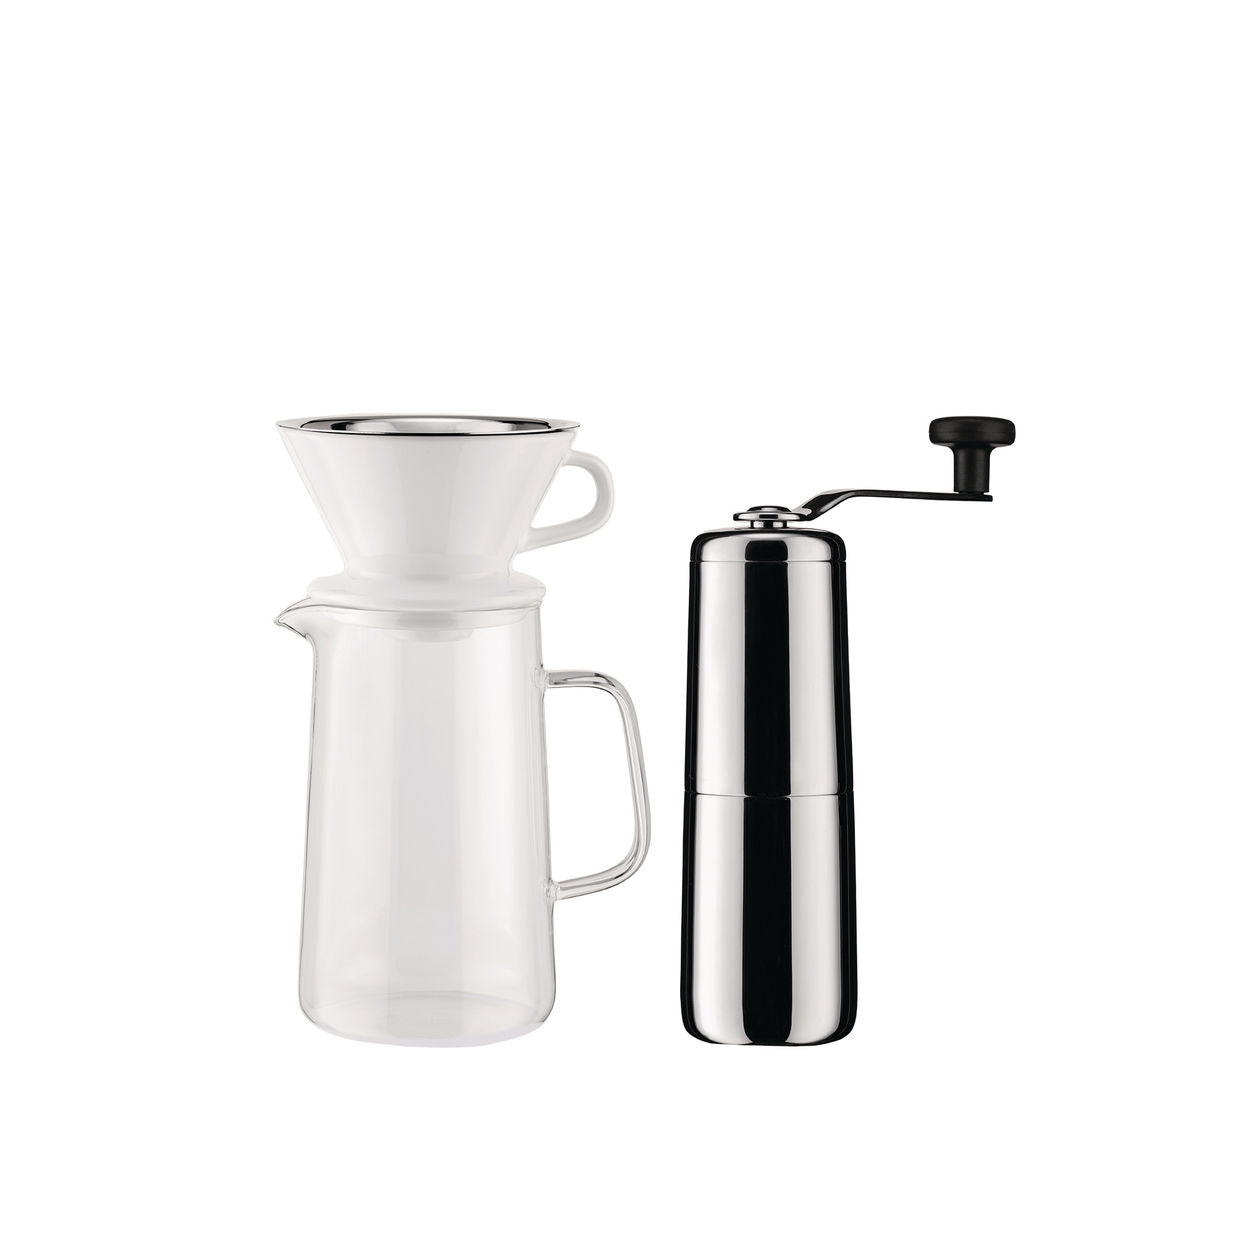 Alessi Langsamer Kaffee -Set, Mühle + Krug + Nettofilter + Filterhalter